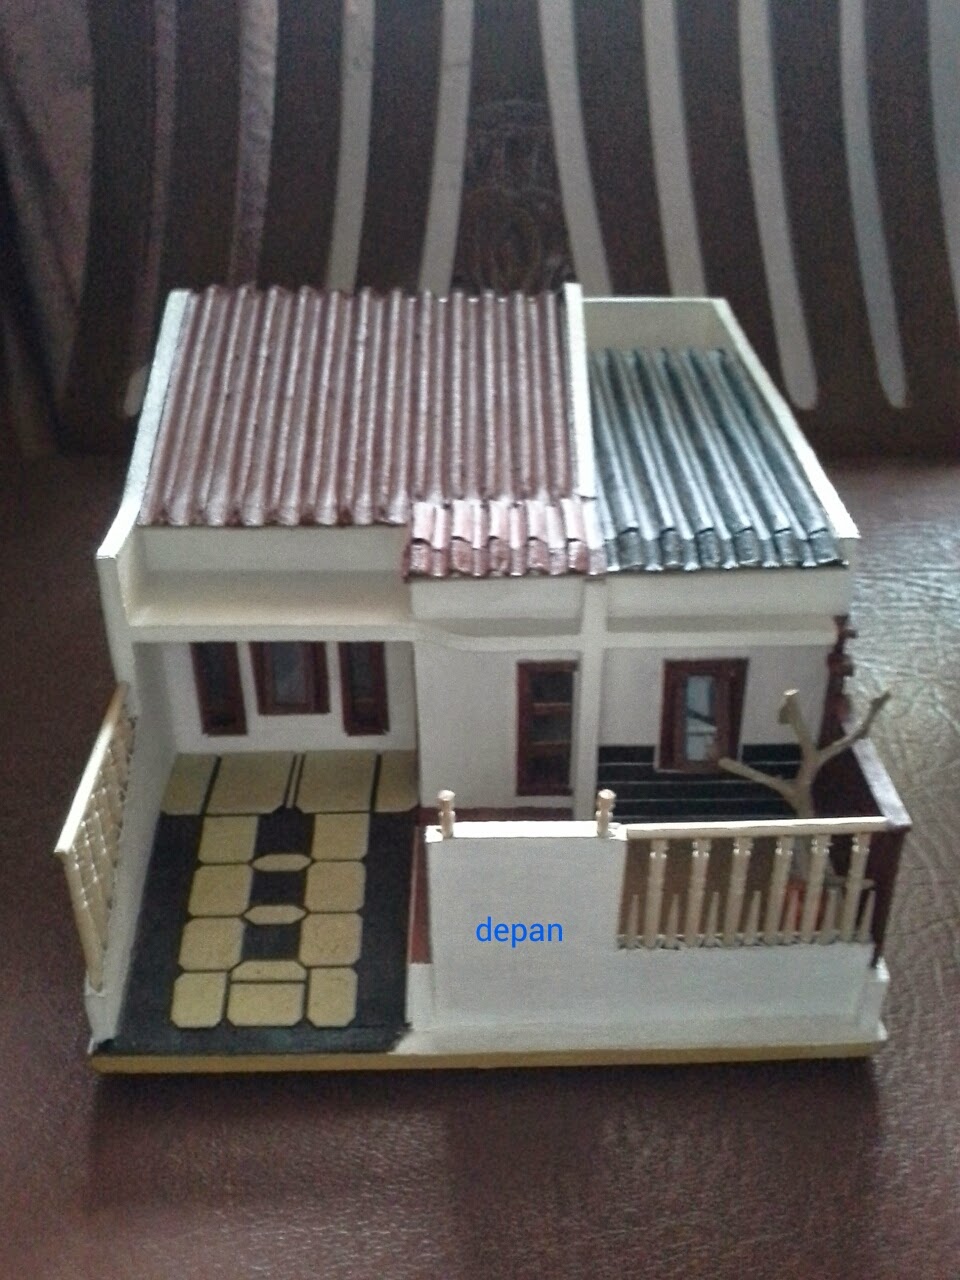  Maket  Miniatur Rumah  Kardus  Maket  Miniatur Rumah  Kardus 